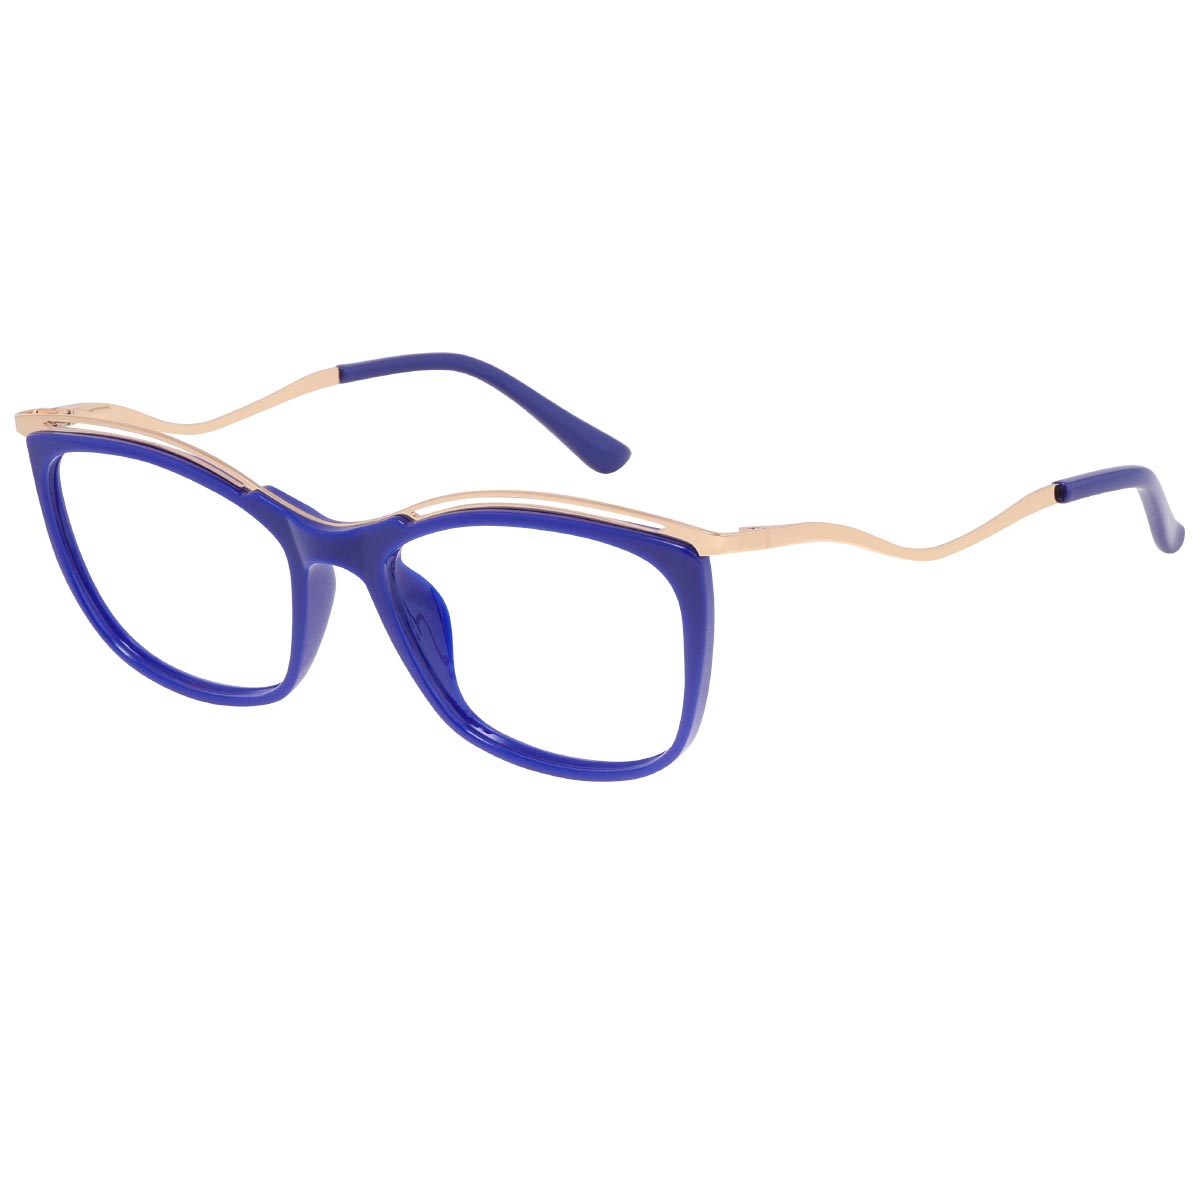 Annon - Square Blue Reading Glasses for Women